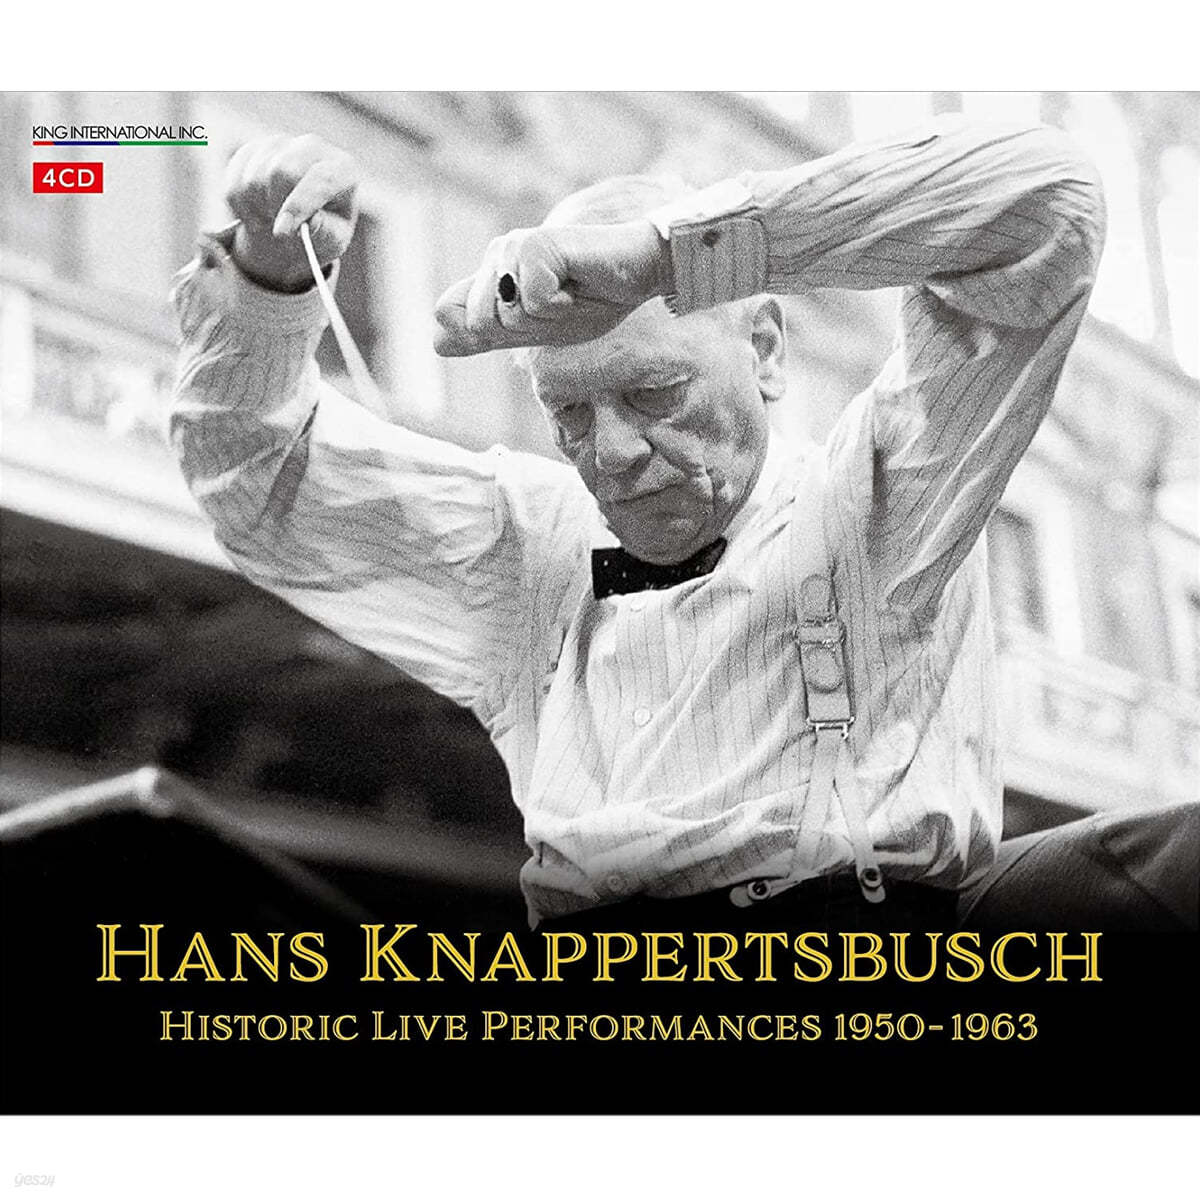 Hans Knappertsbusch 한스 크나퍼츠부쉬 - 1950-1963년 명연주집 (Historic Live Performances 1950-1963) 